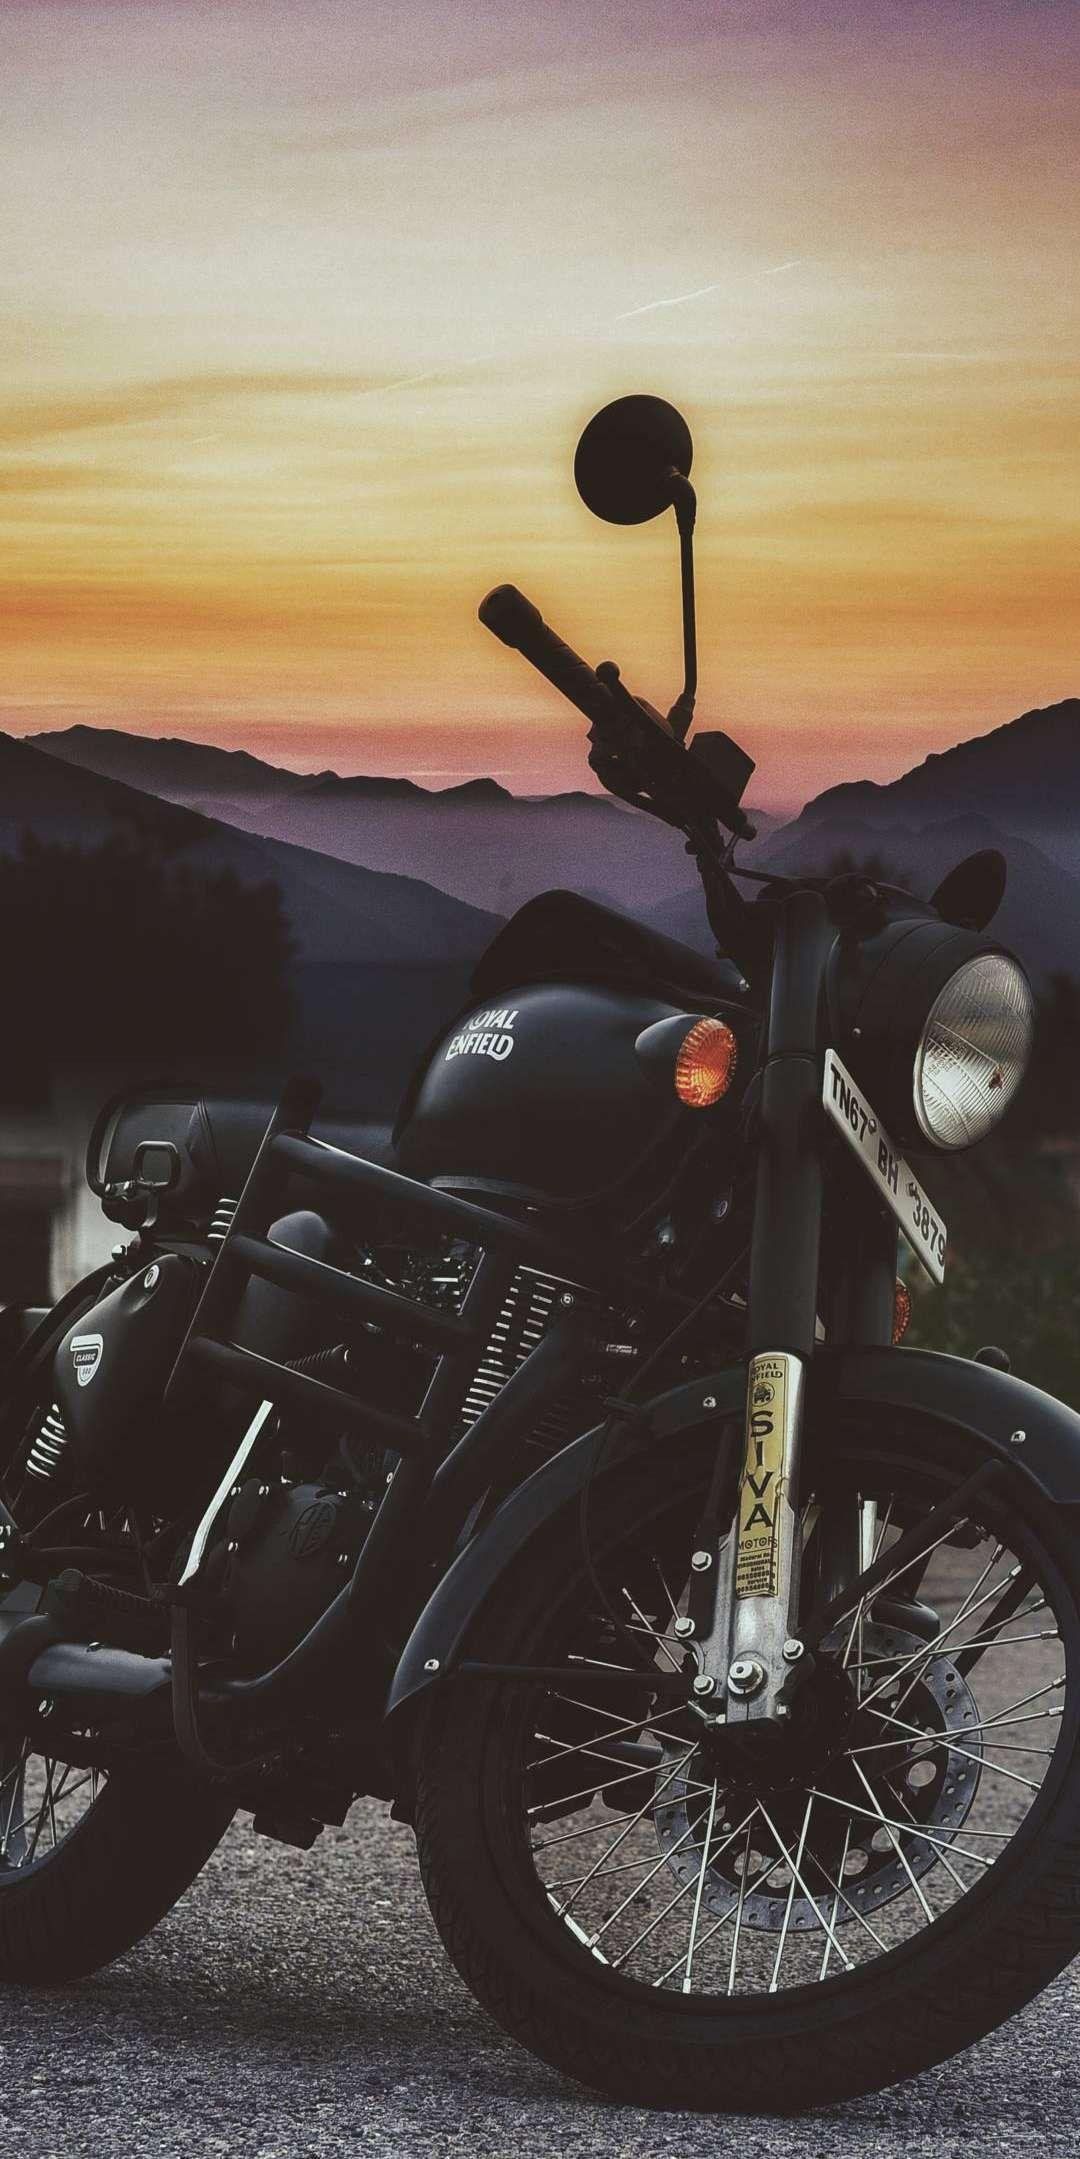 Royal Enfield Bike - Sunset Background